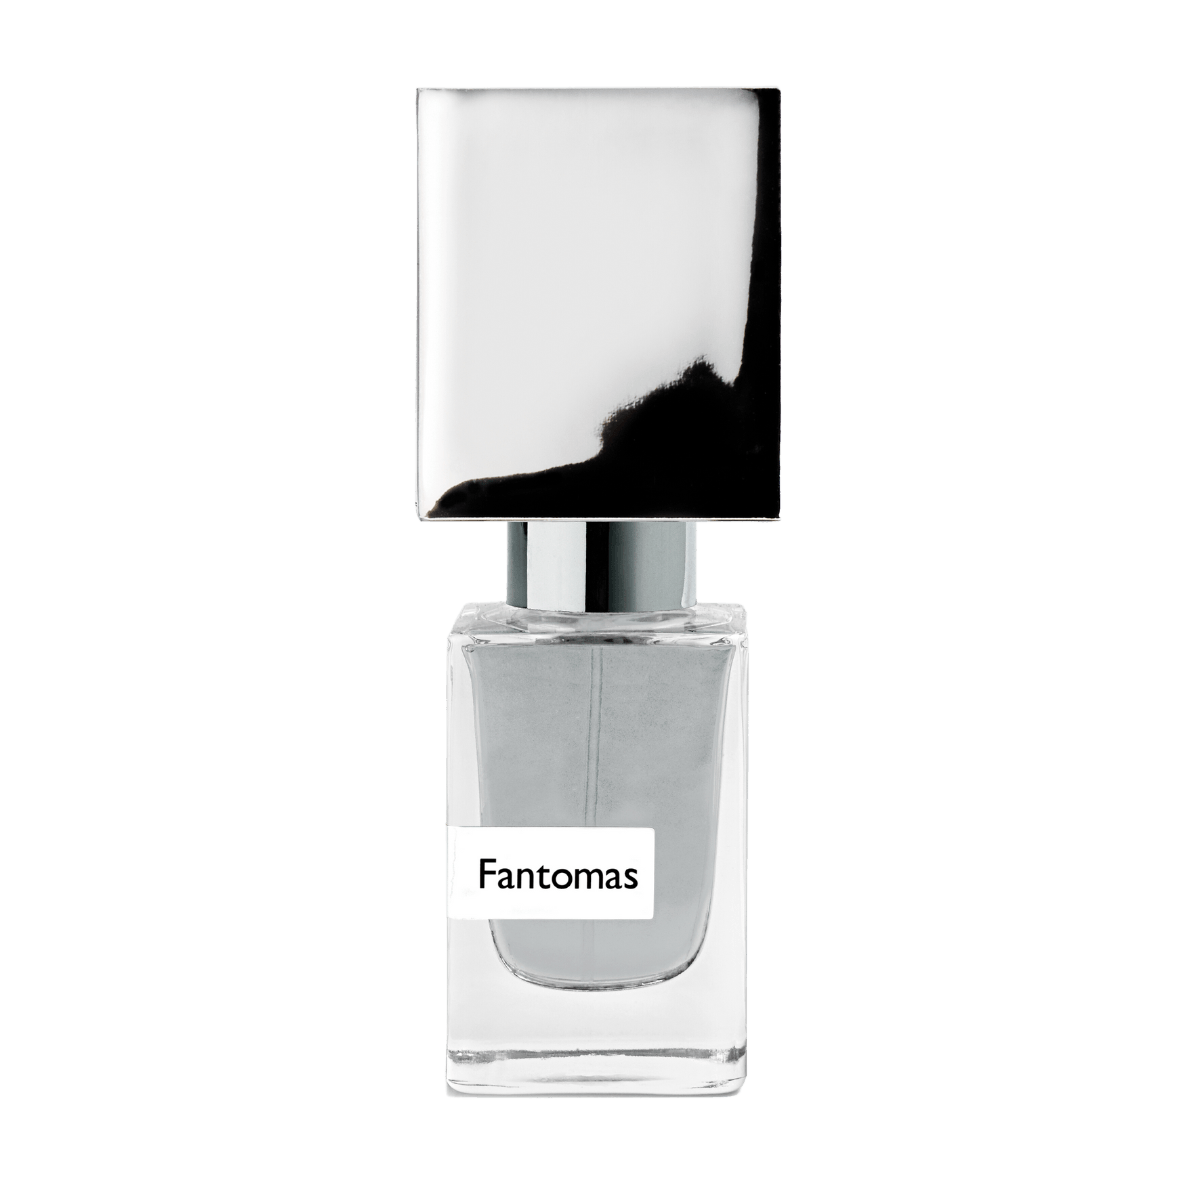 Image of Fantomas extrait de parfum 30 ml by the perfume brand Nasomatto